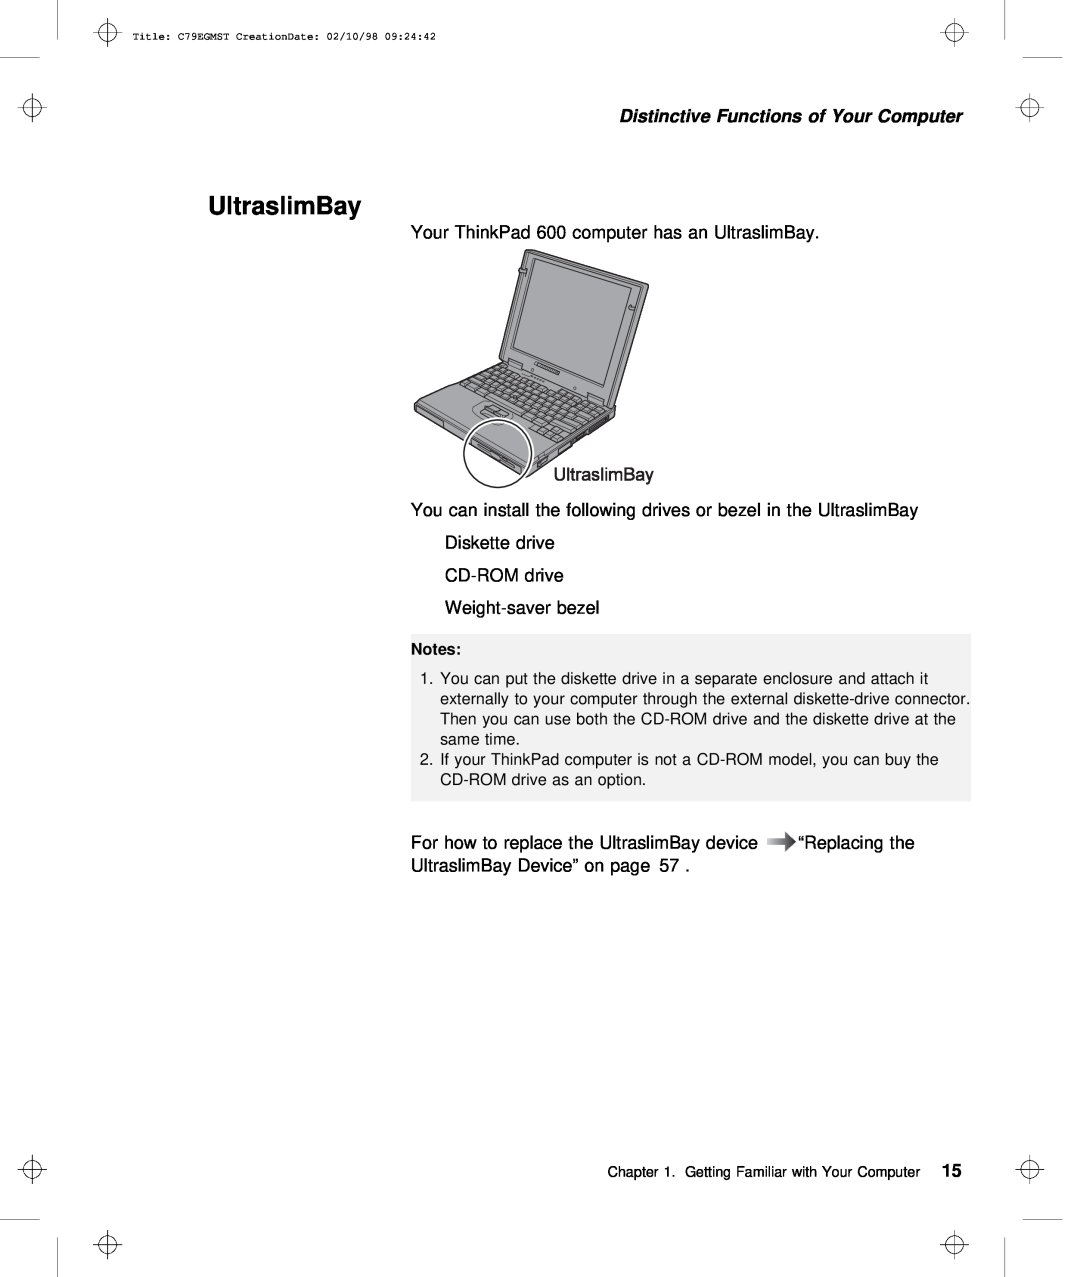 IBM C79EGMST manual UltraslimBay, Distinctive Functions of Your Computer 